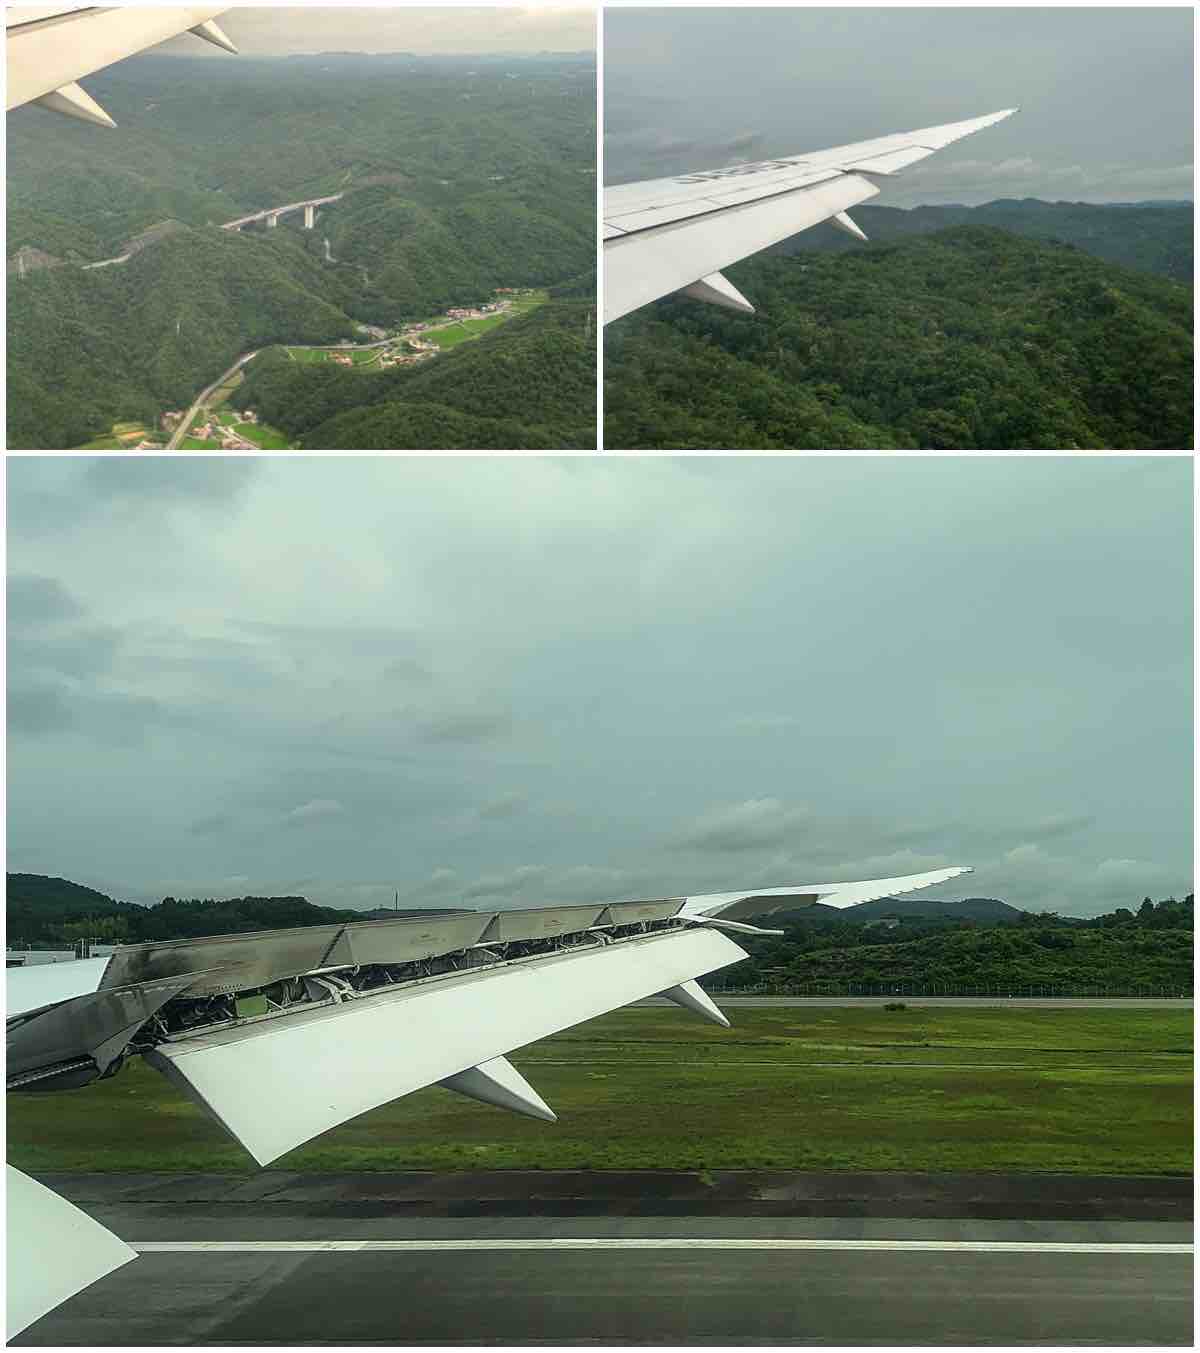 ANA 787-8 landing in Hiroshima